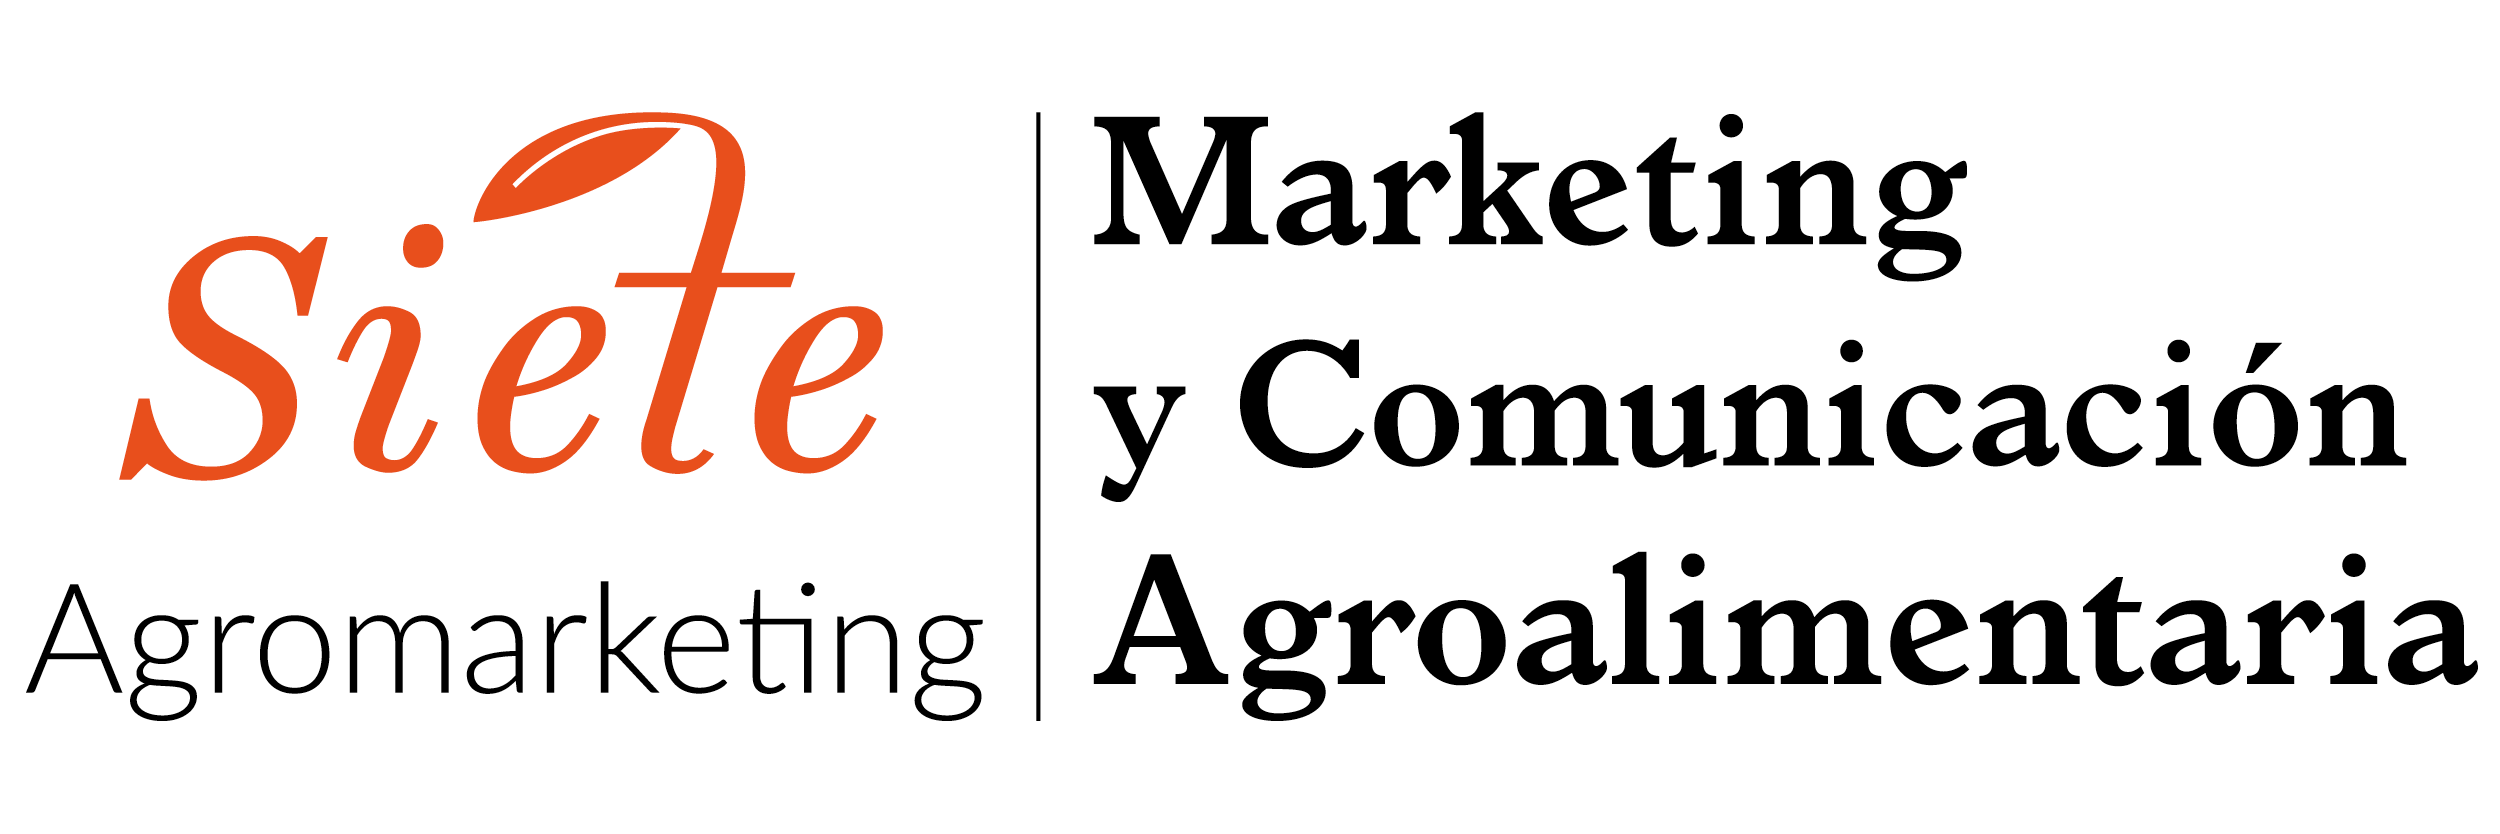 7 Agromarketing